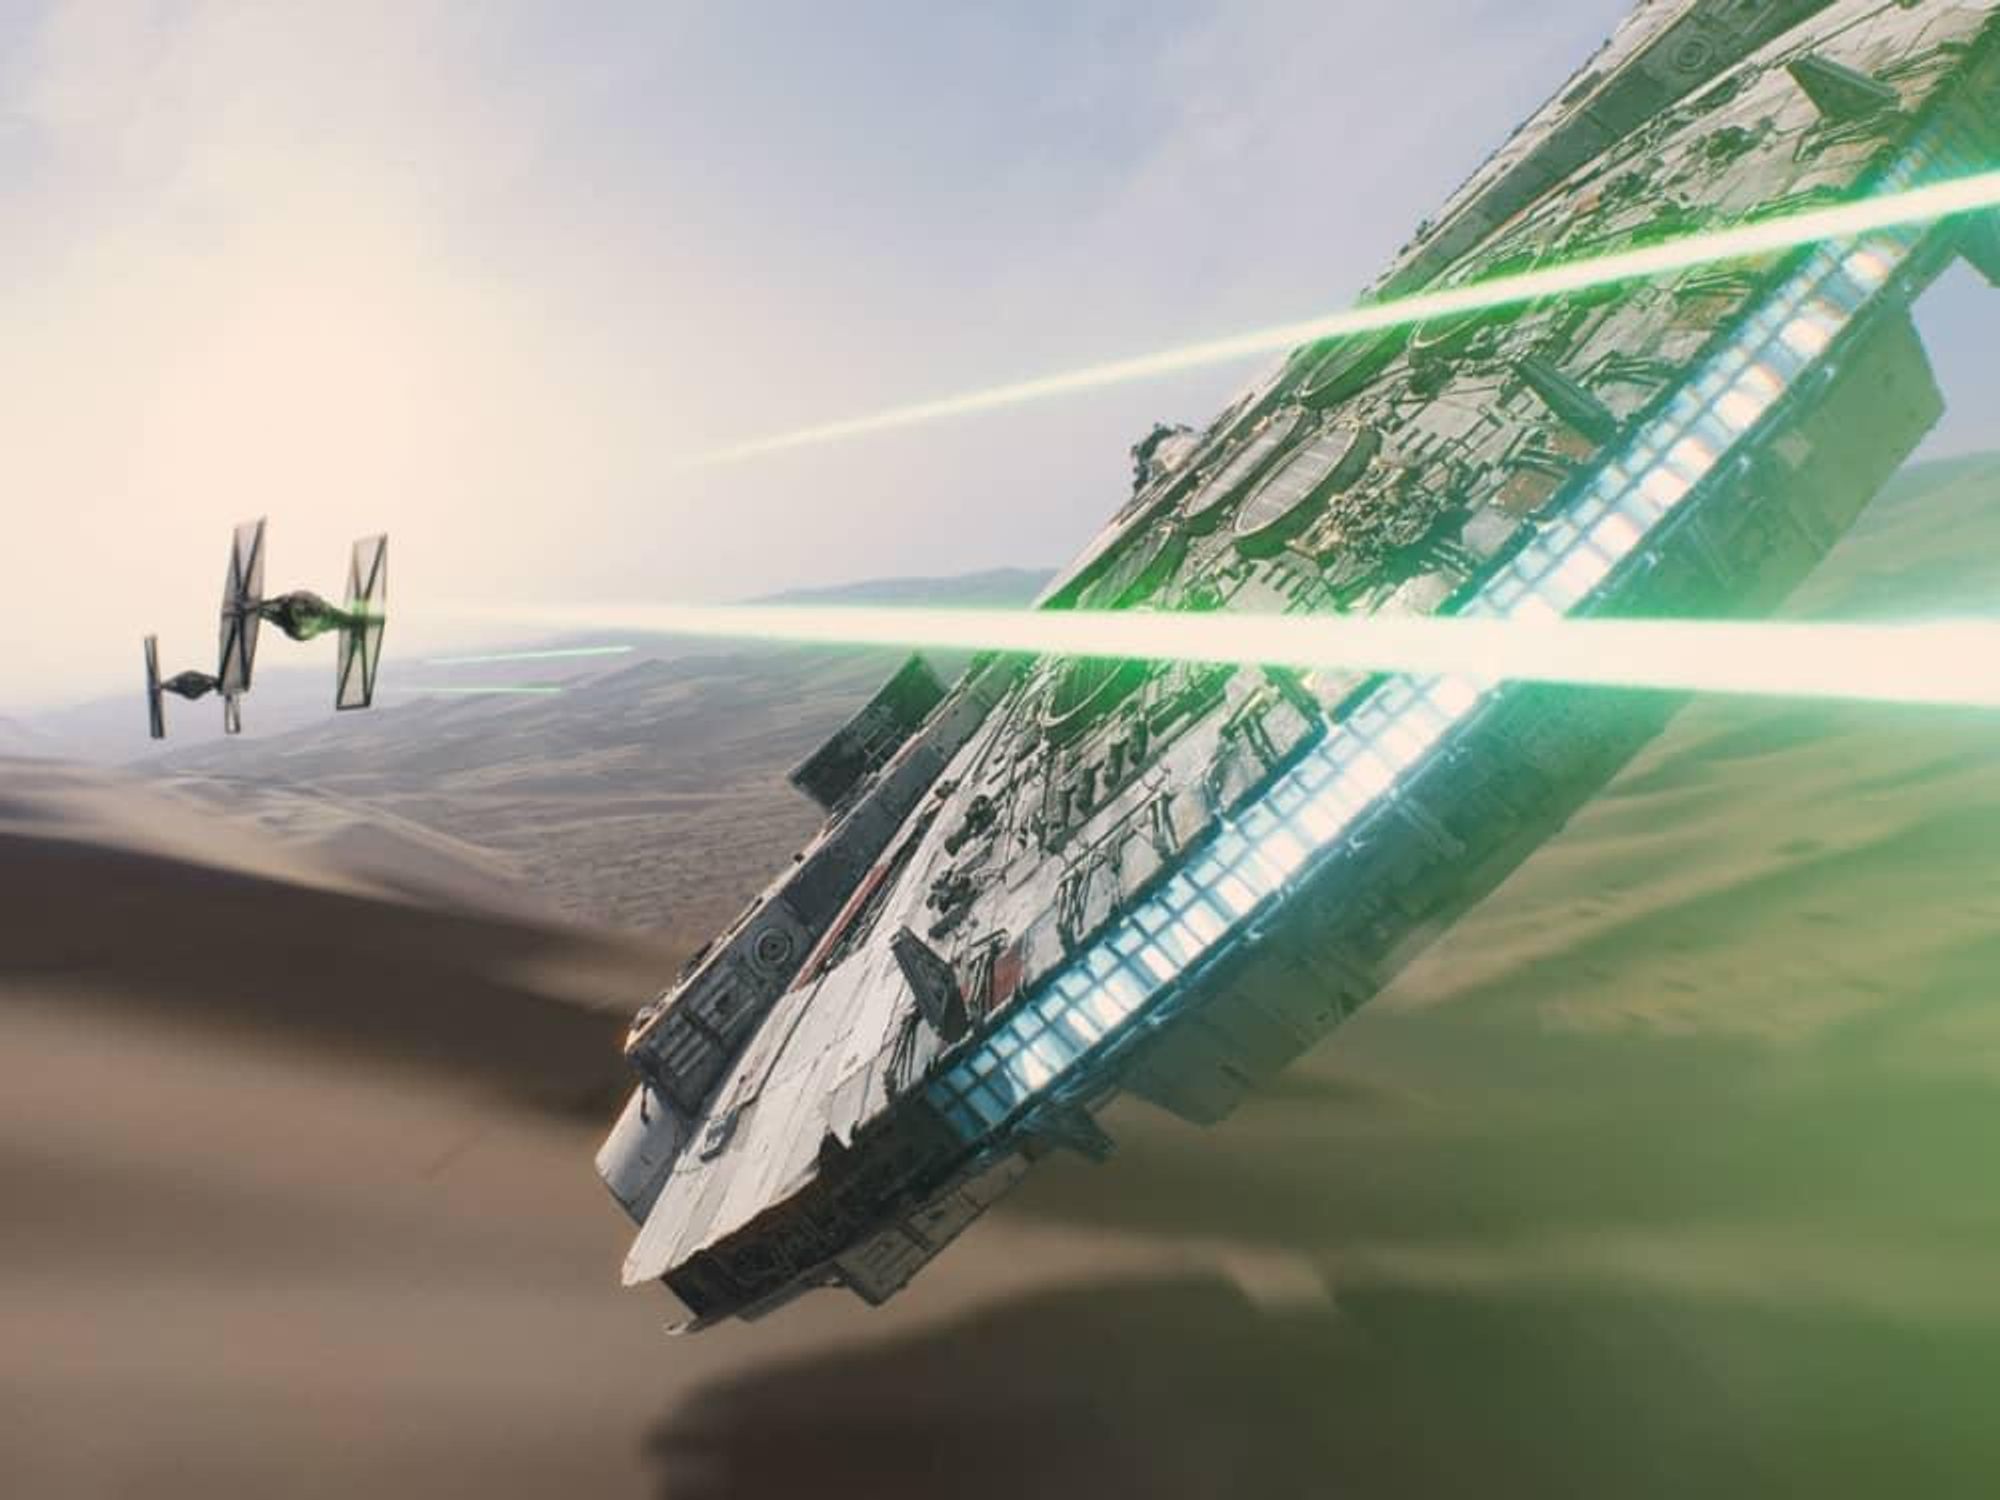 Scene from Star Wars: The Force Awakens